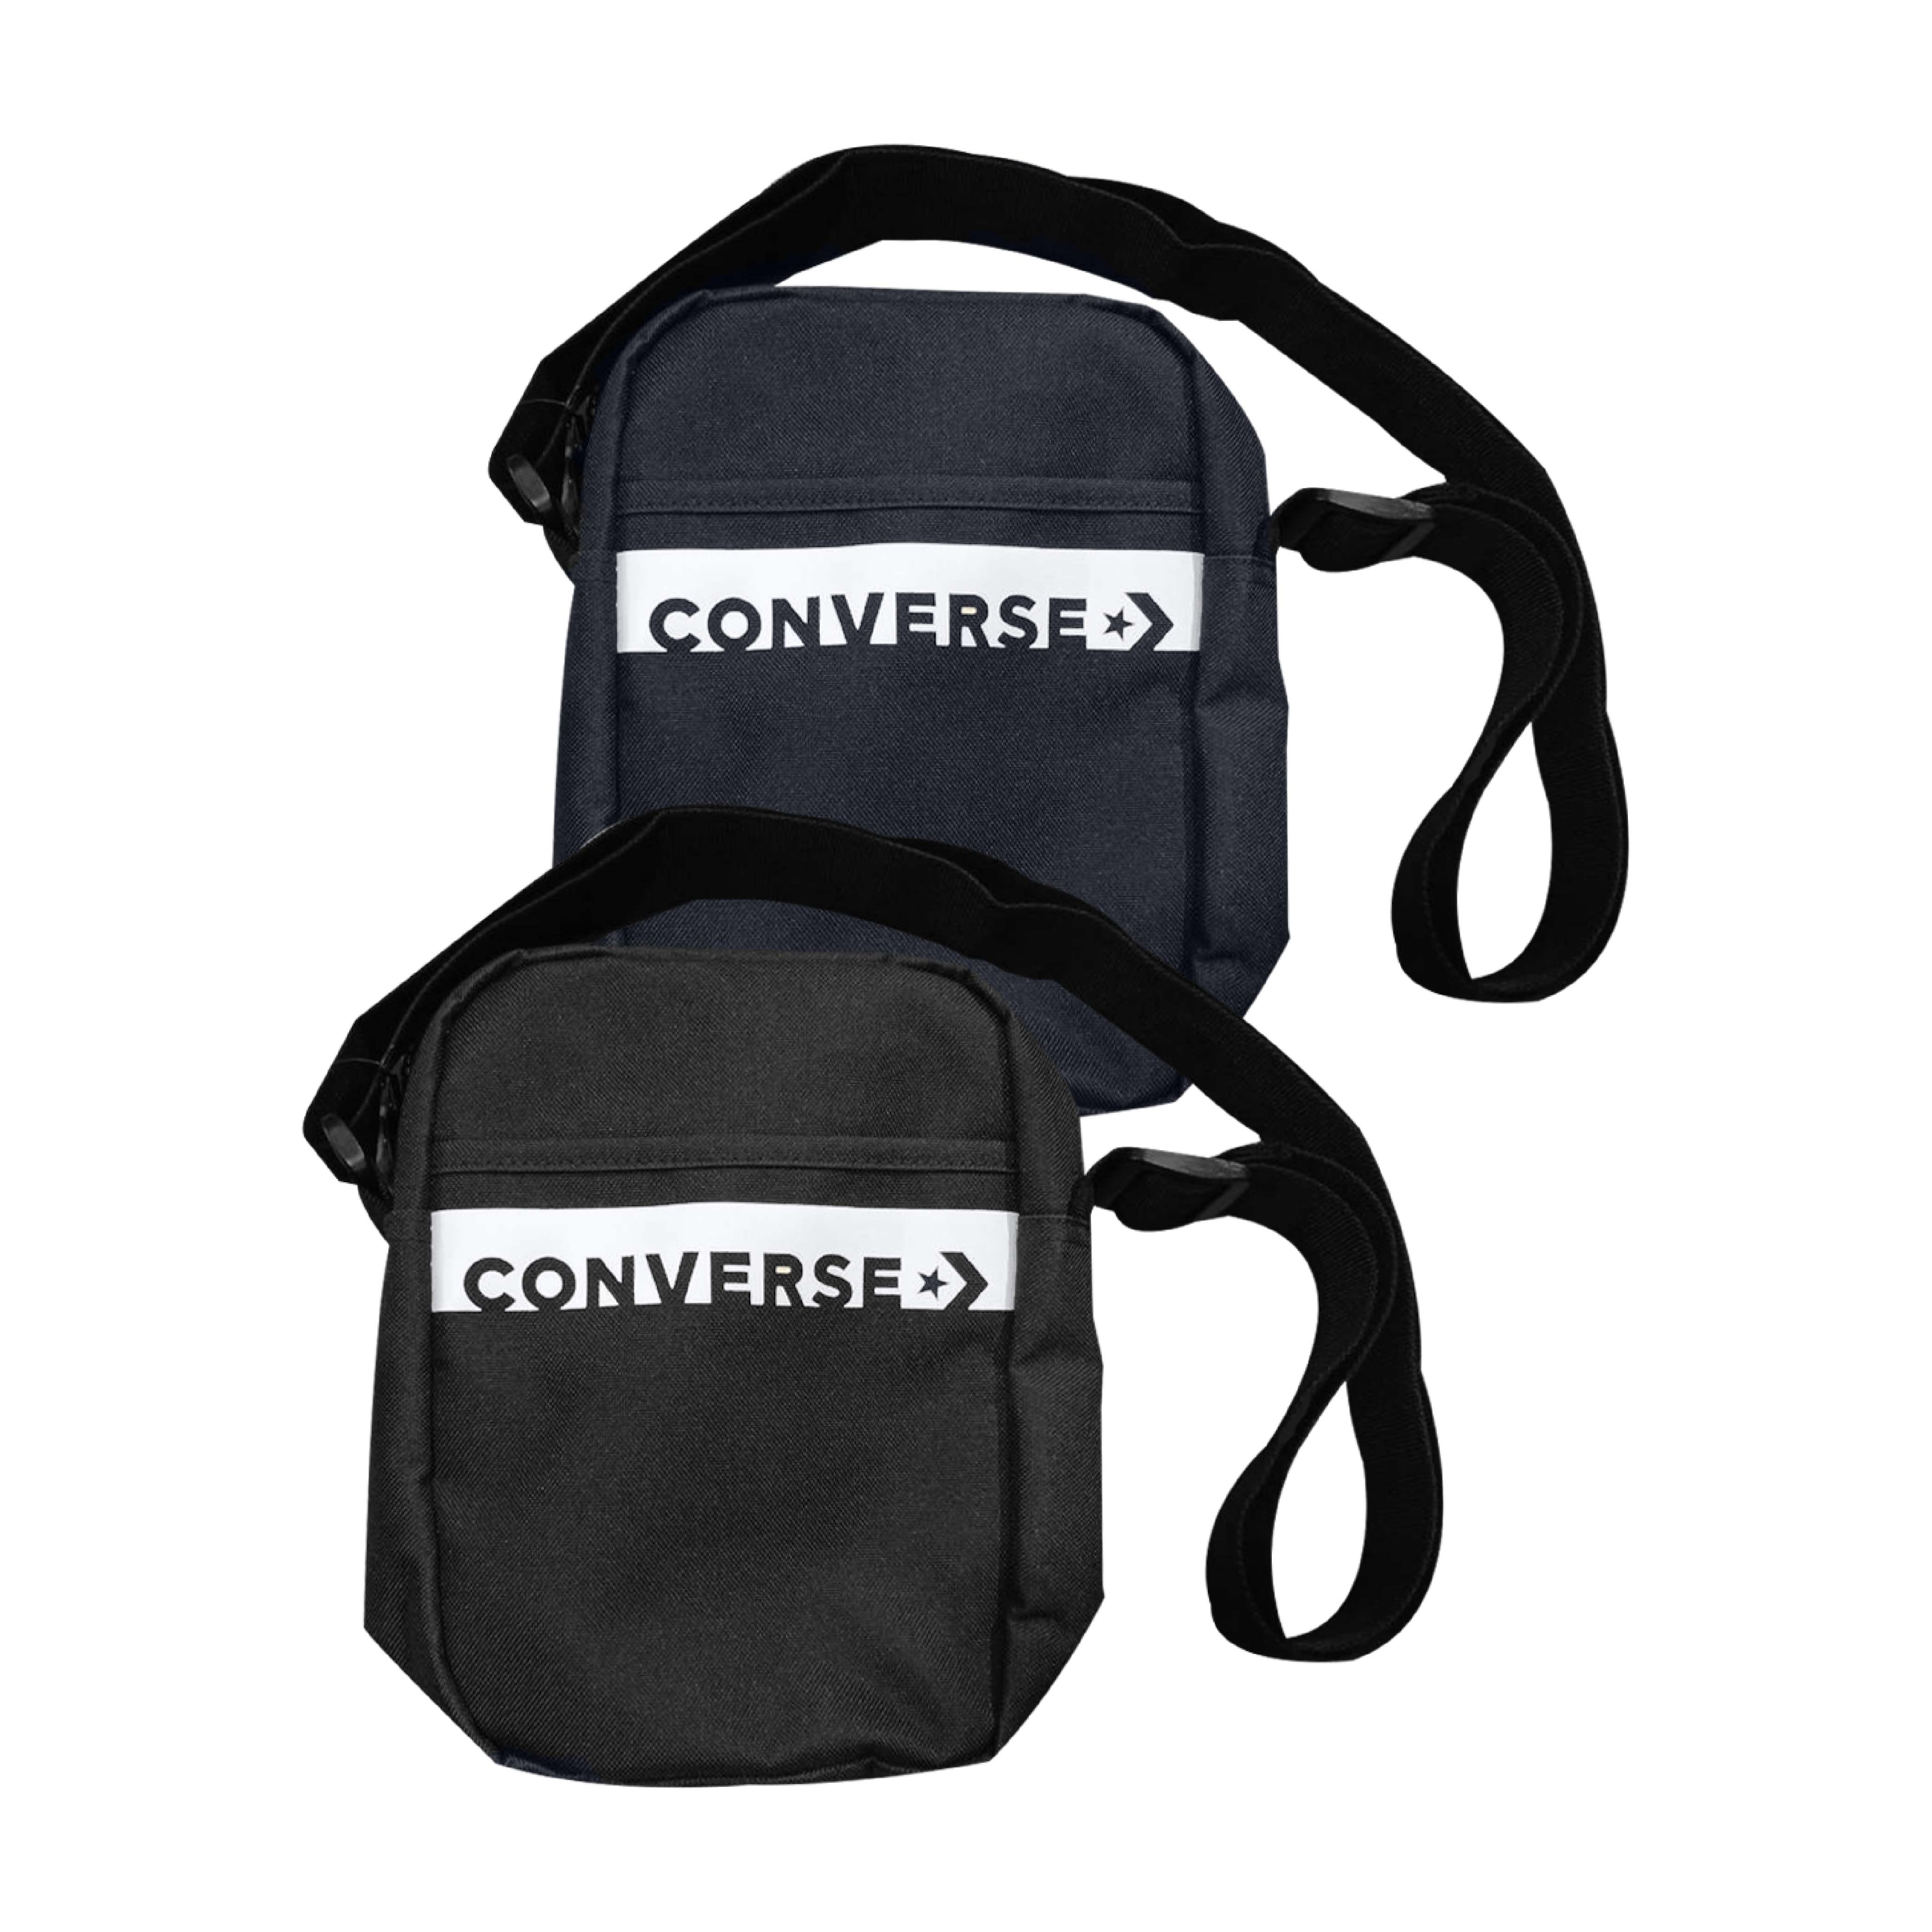 converse revolution mini bag